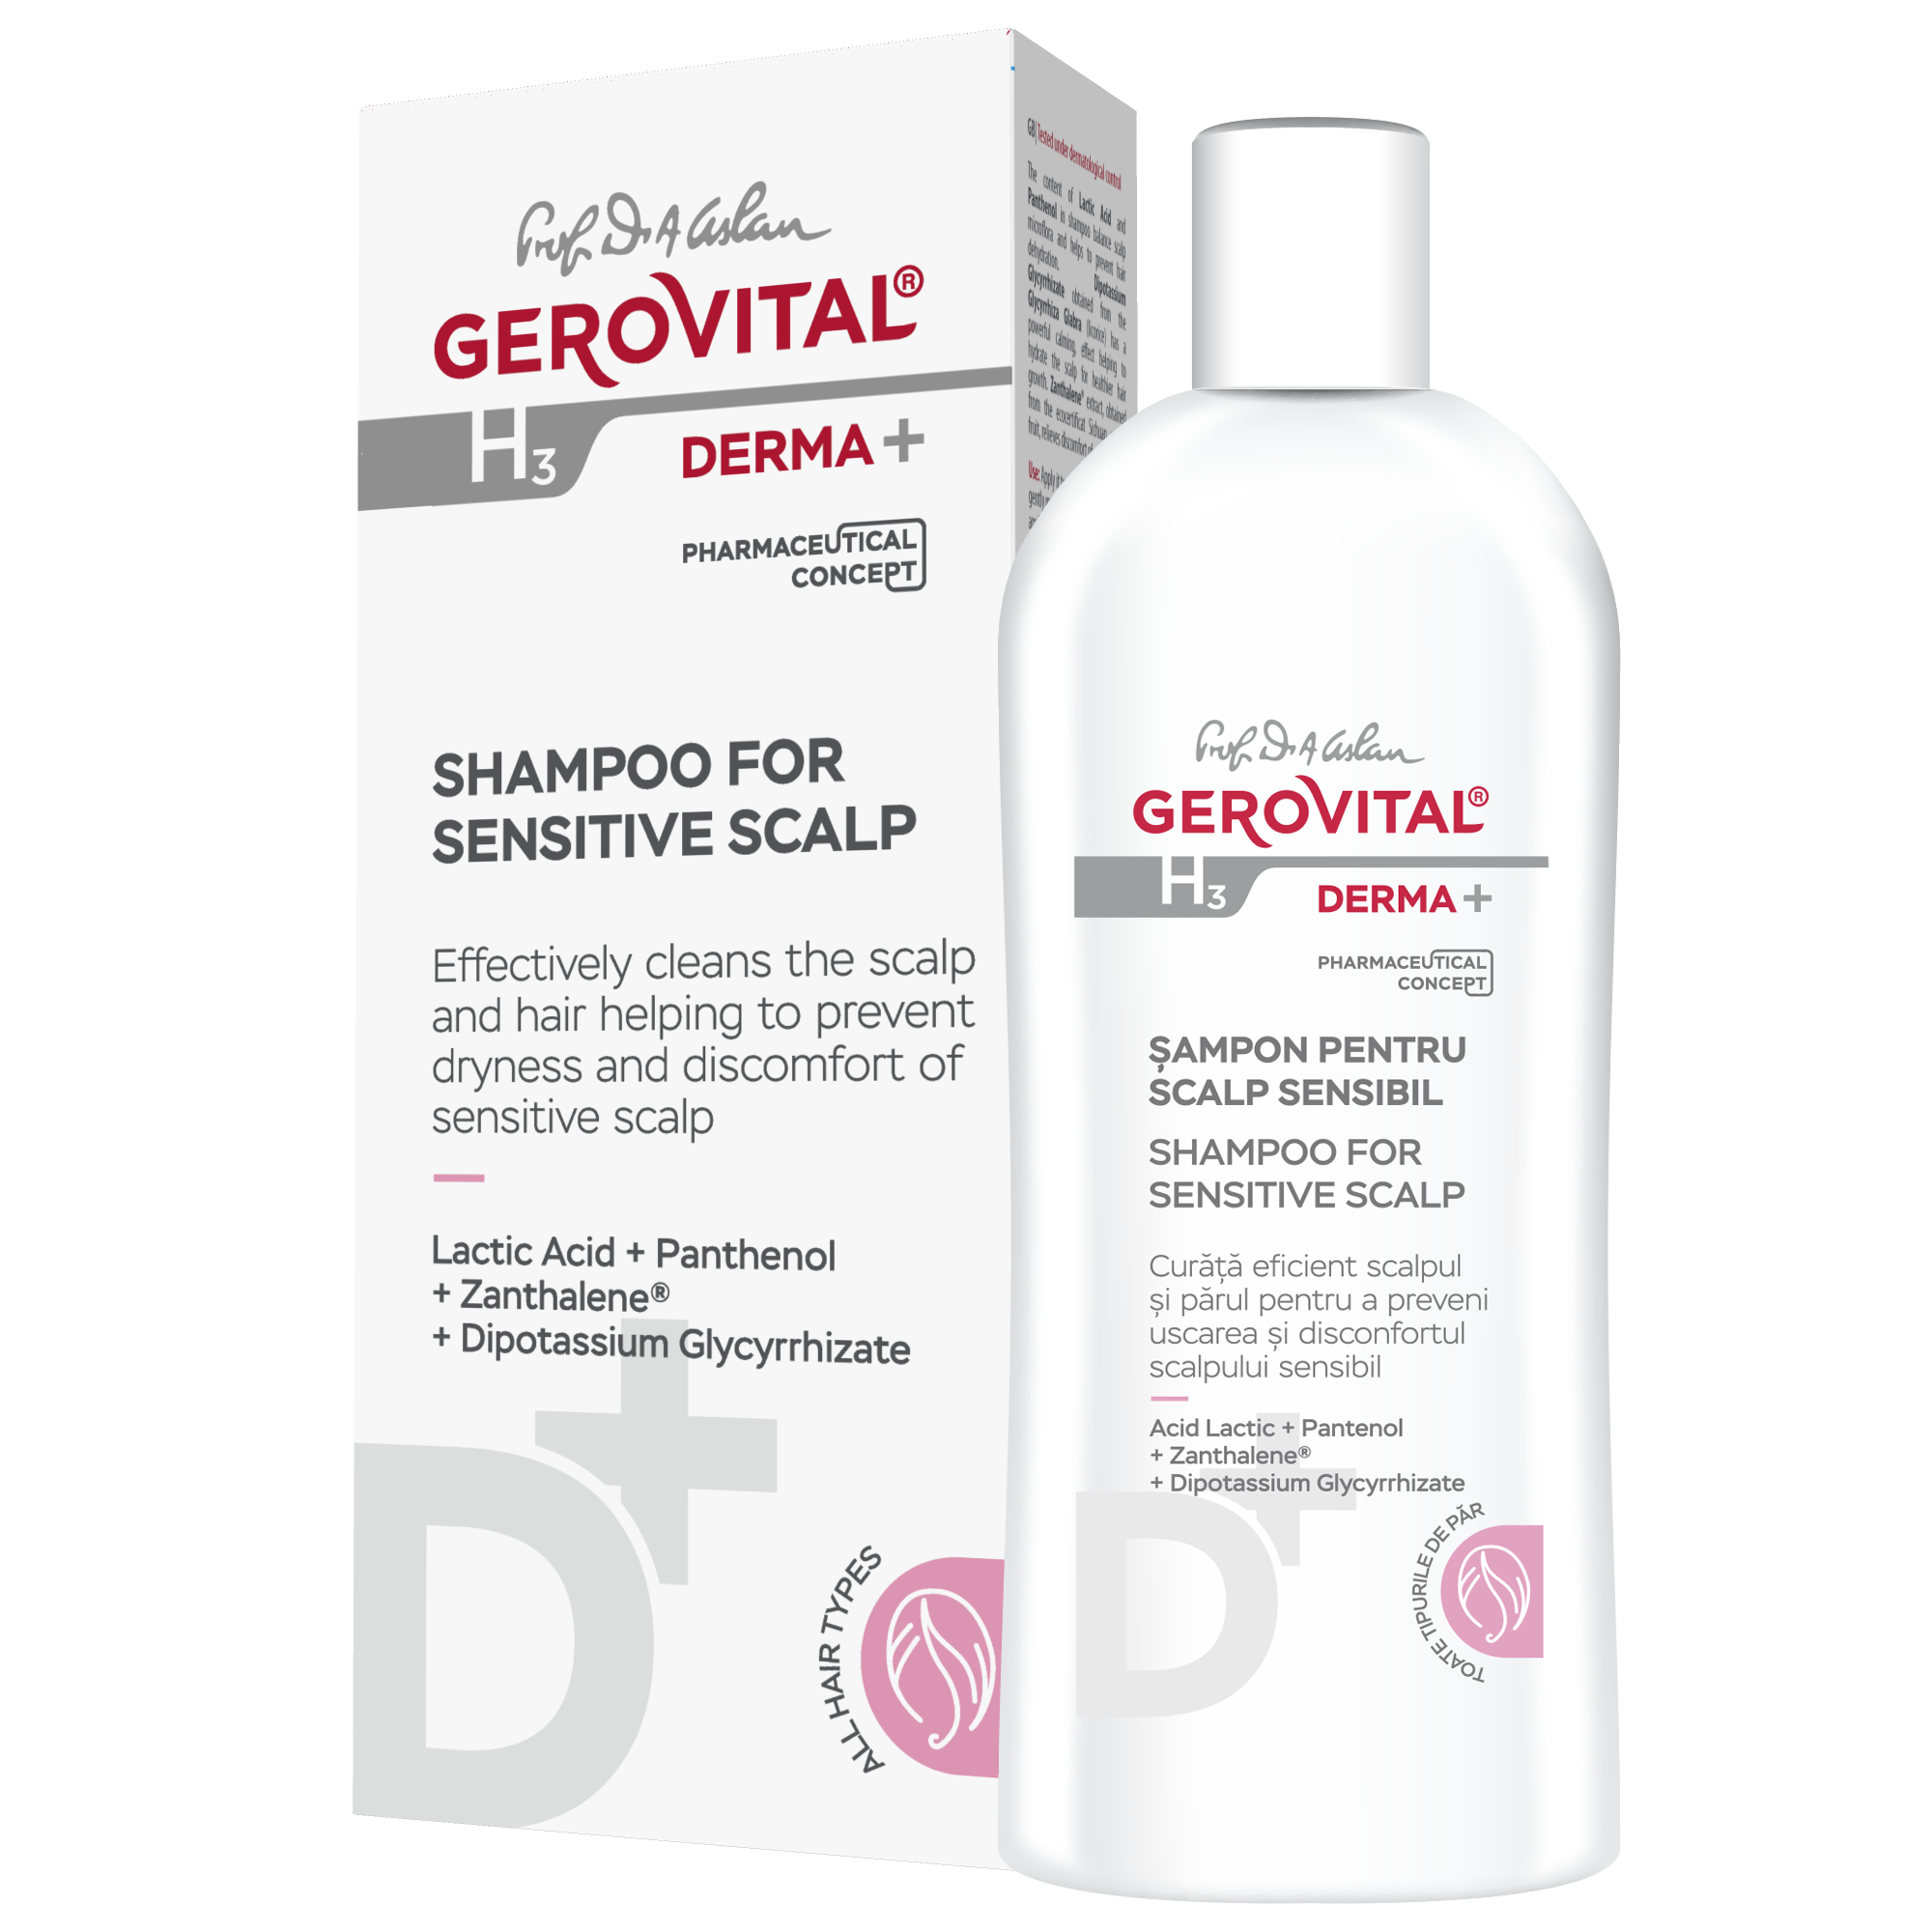 Sampon pentru scalp sensibil Gerovital H3 Derma+, 200 ml, Gerovital